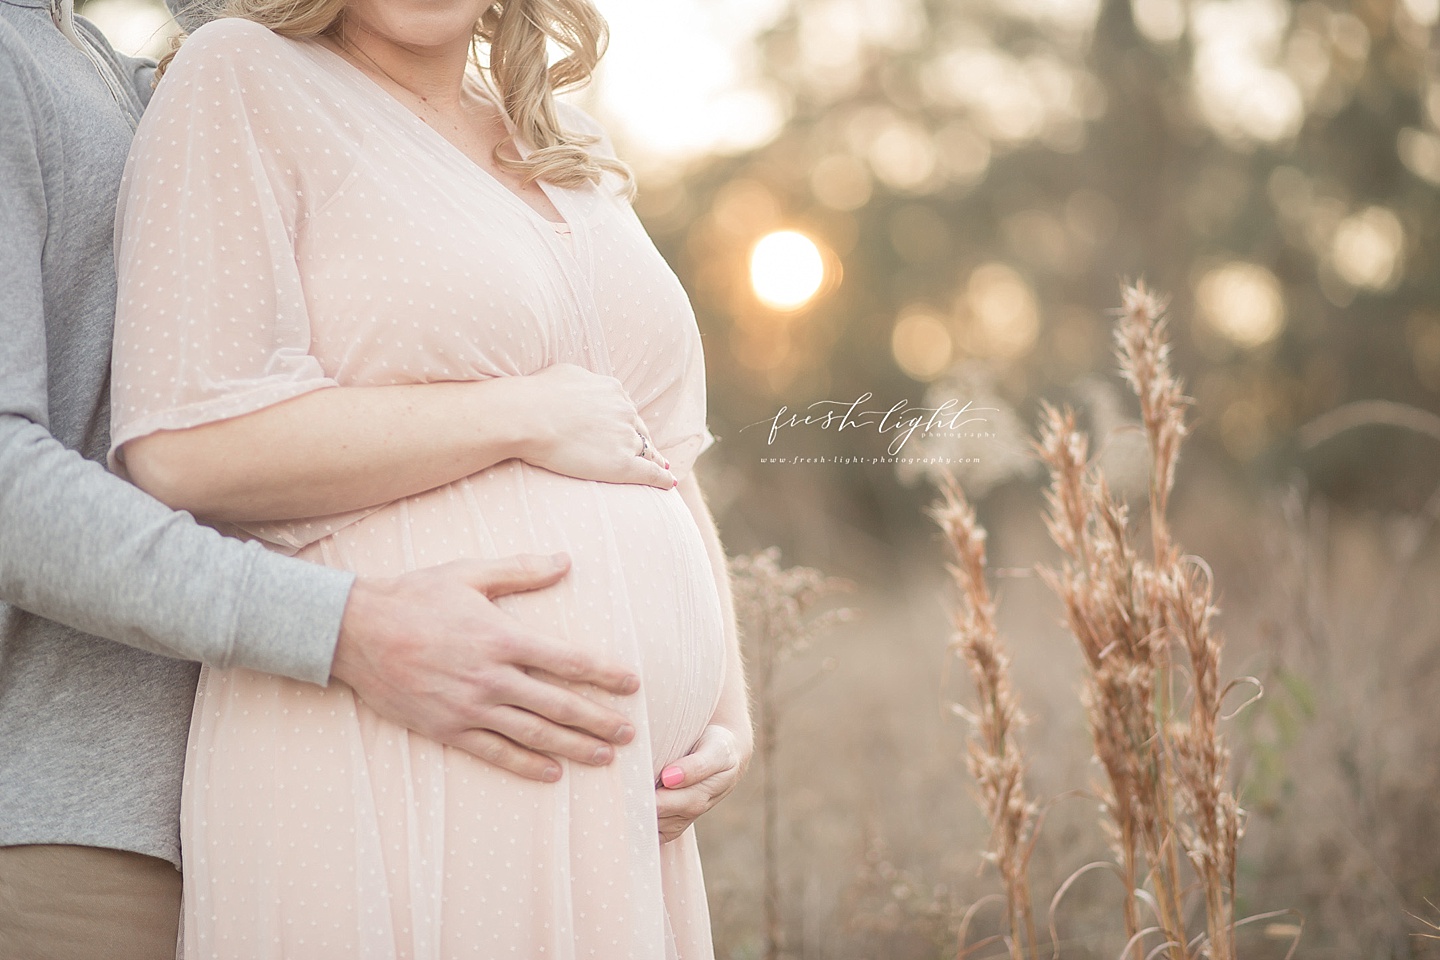 Fresh Light Photography Houston maternity photographer